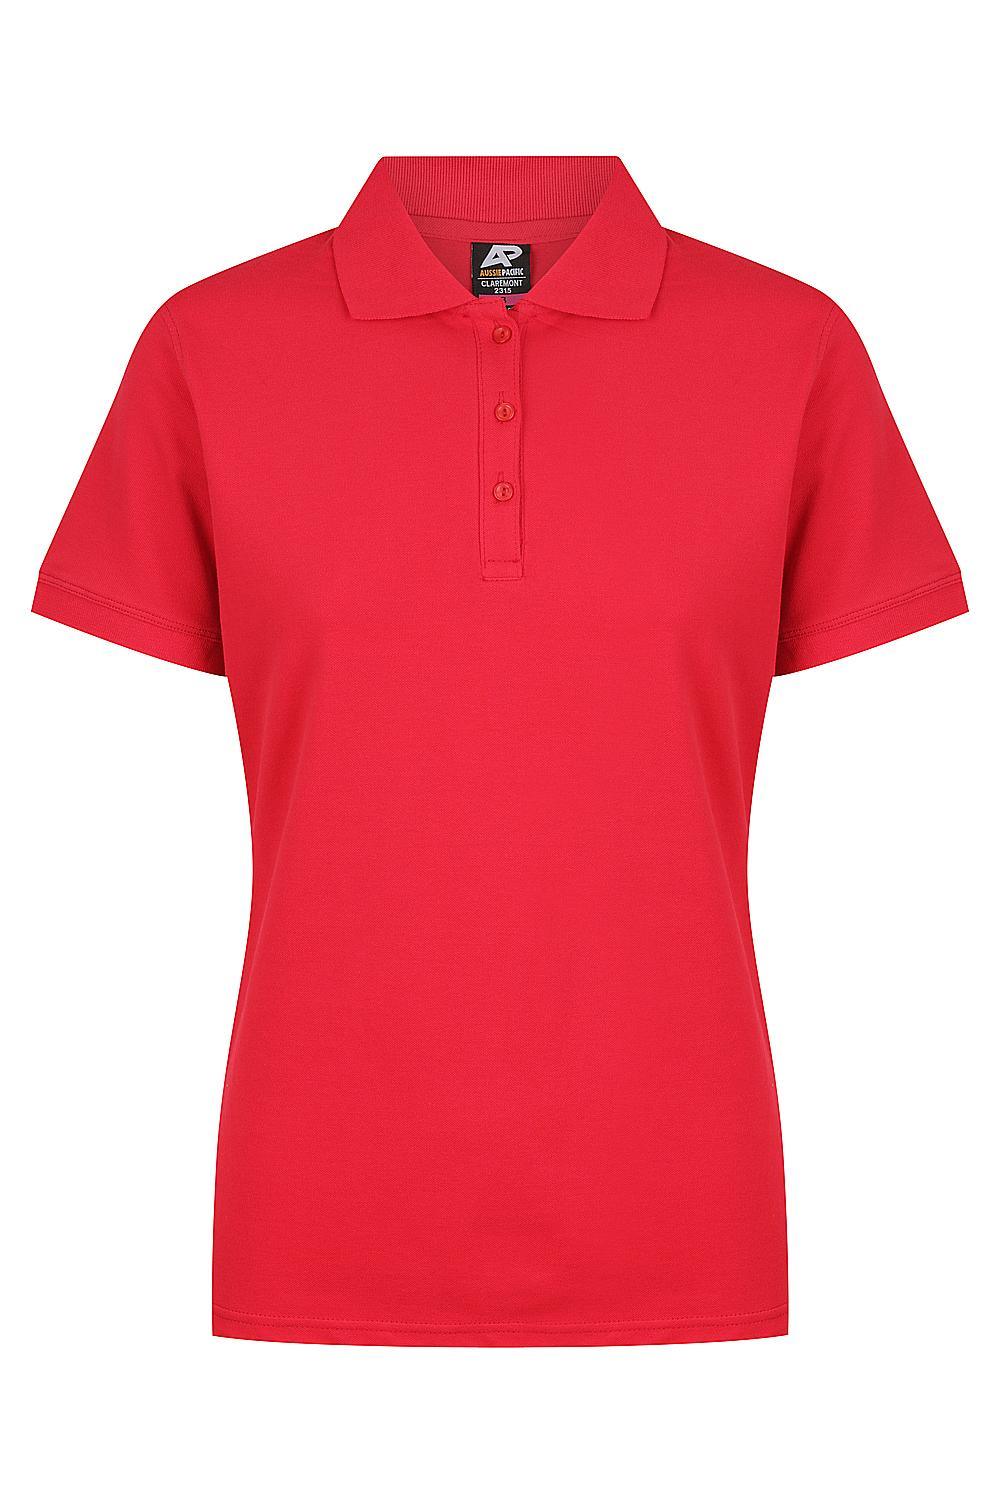 Custom Ladies Claremont Work Shirts - Red